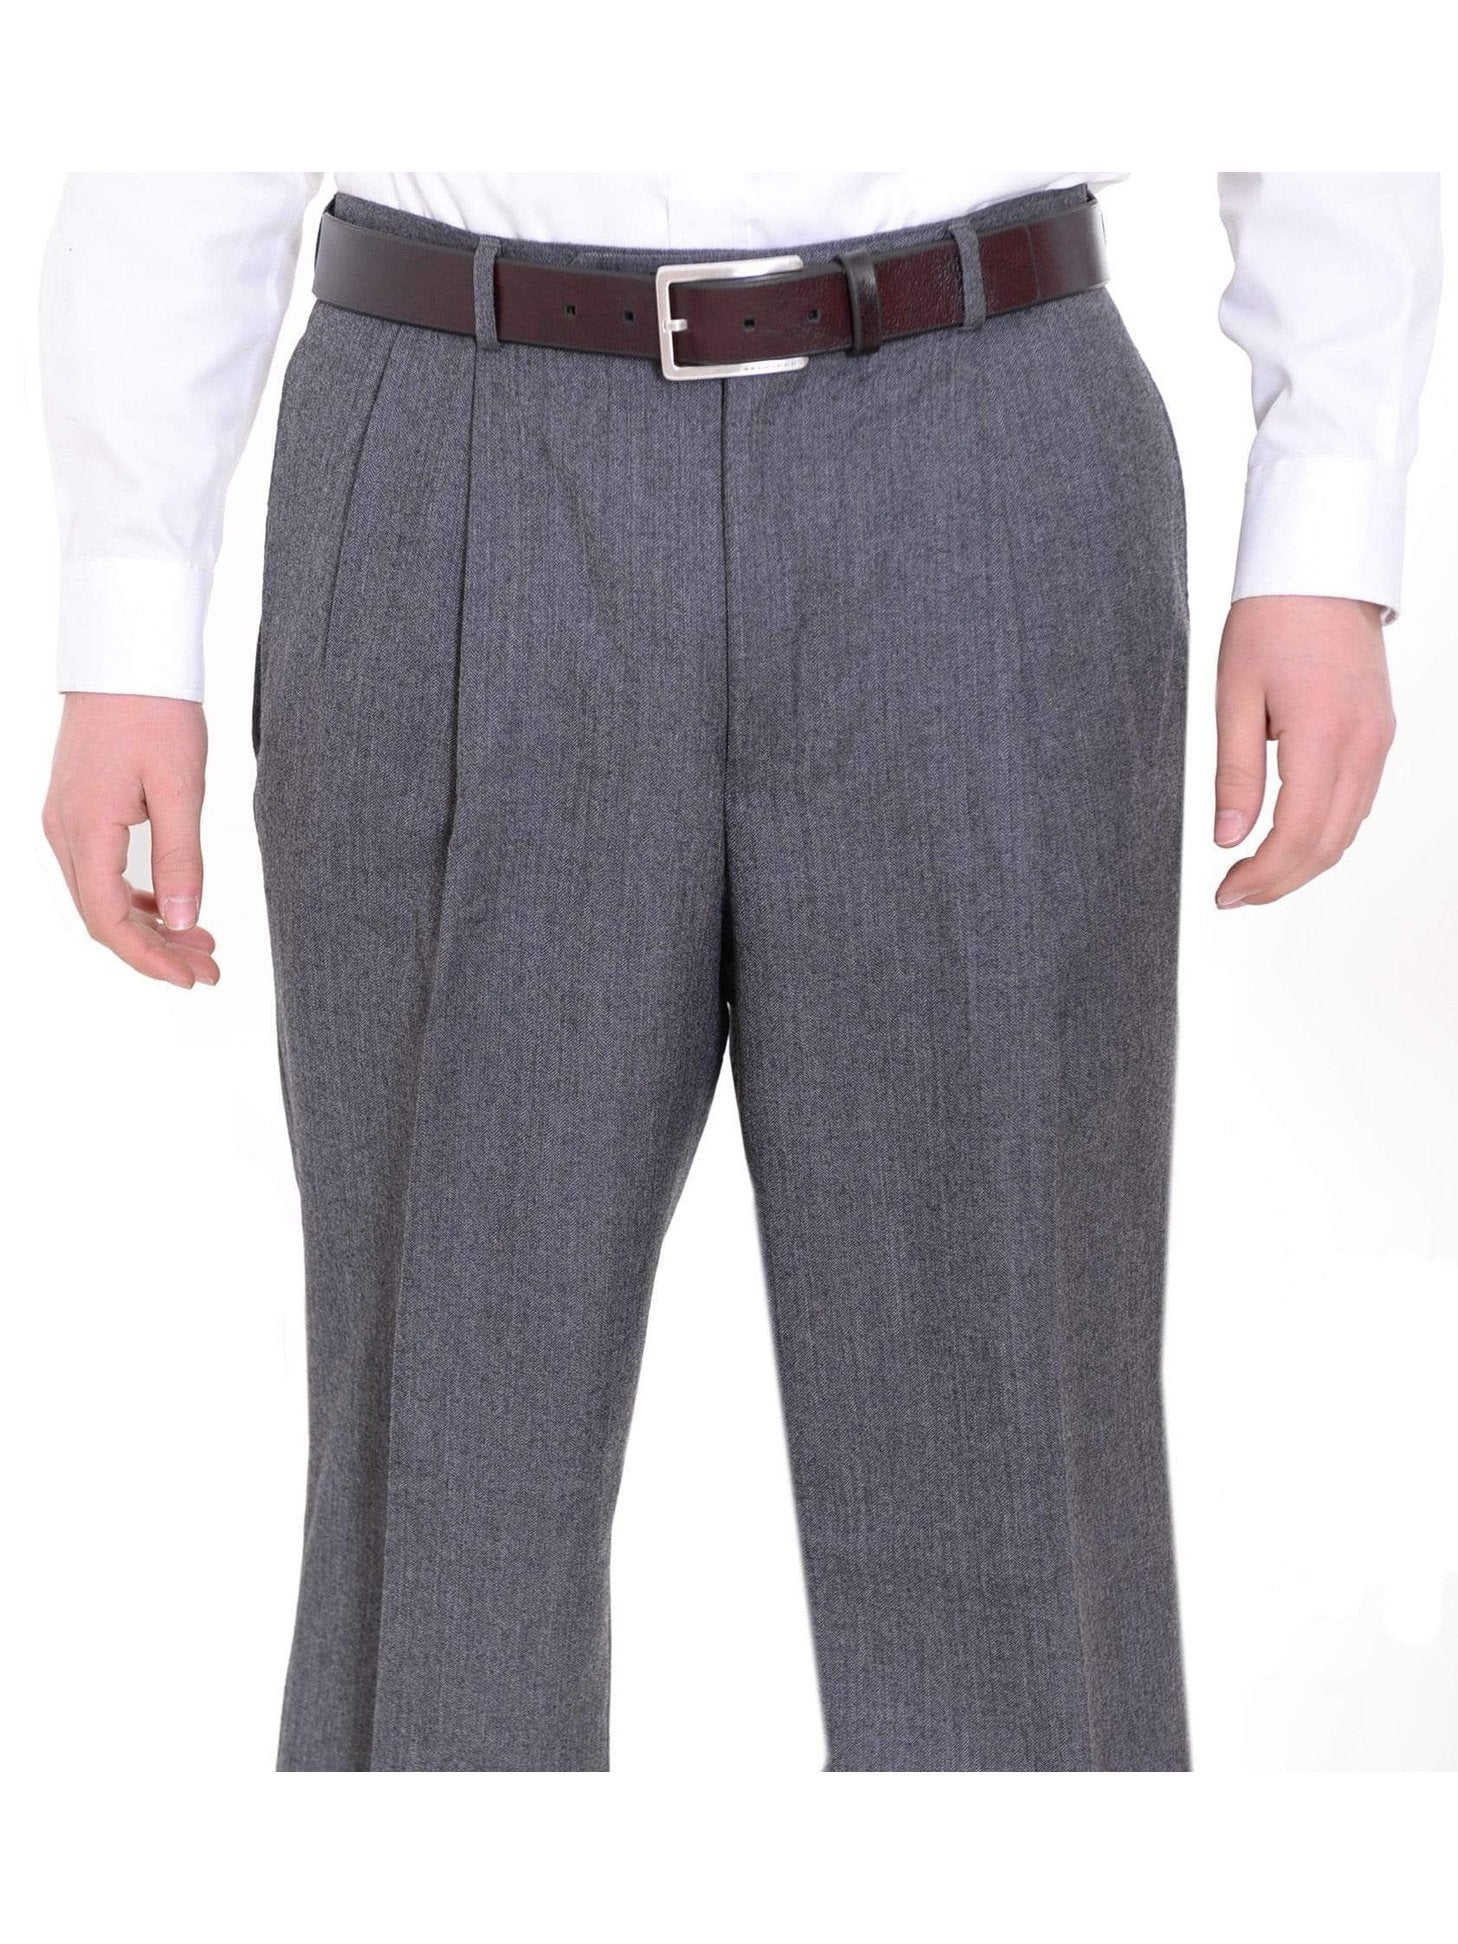 Nautica Regular Fit Gray Herringbone Pleated Wool Dress Pants